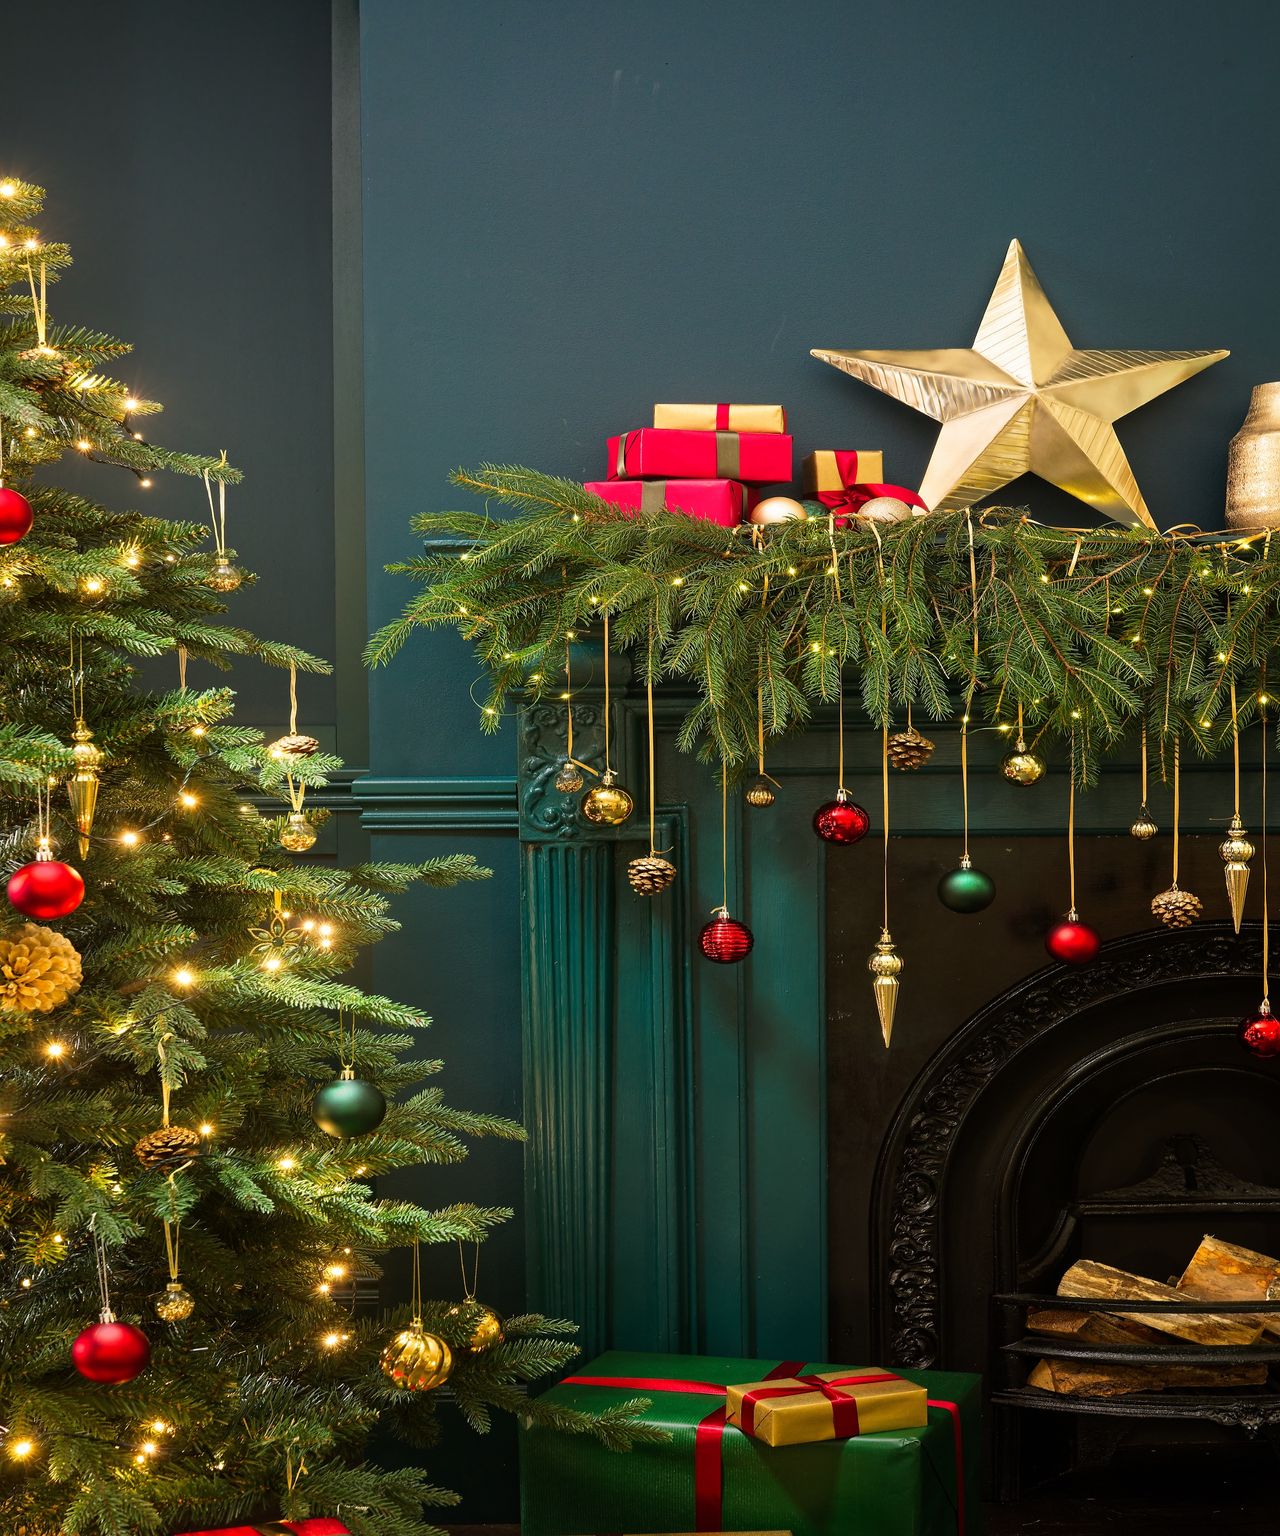 22 Christmas mantel decor ideas for a striking festive display | Real Homes